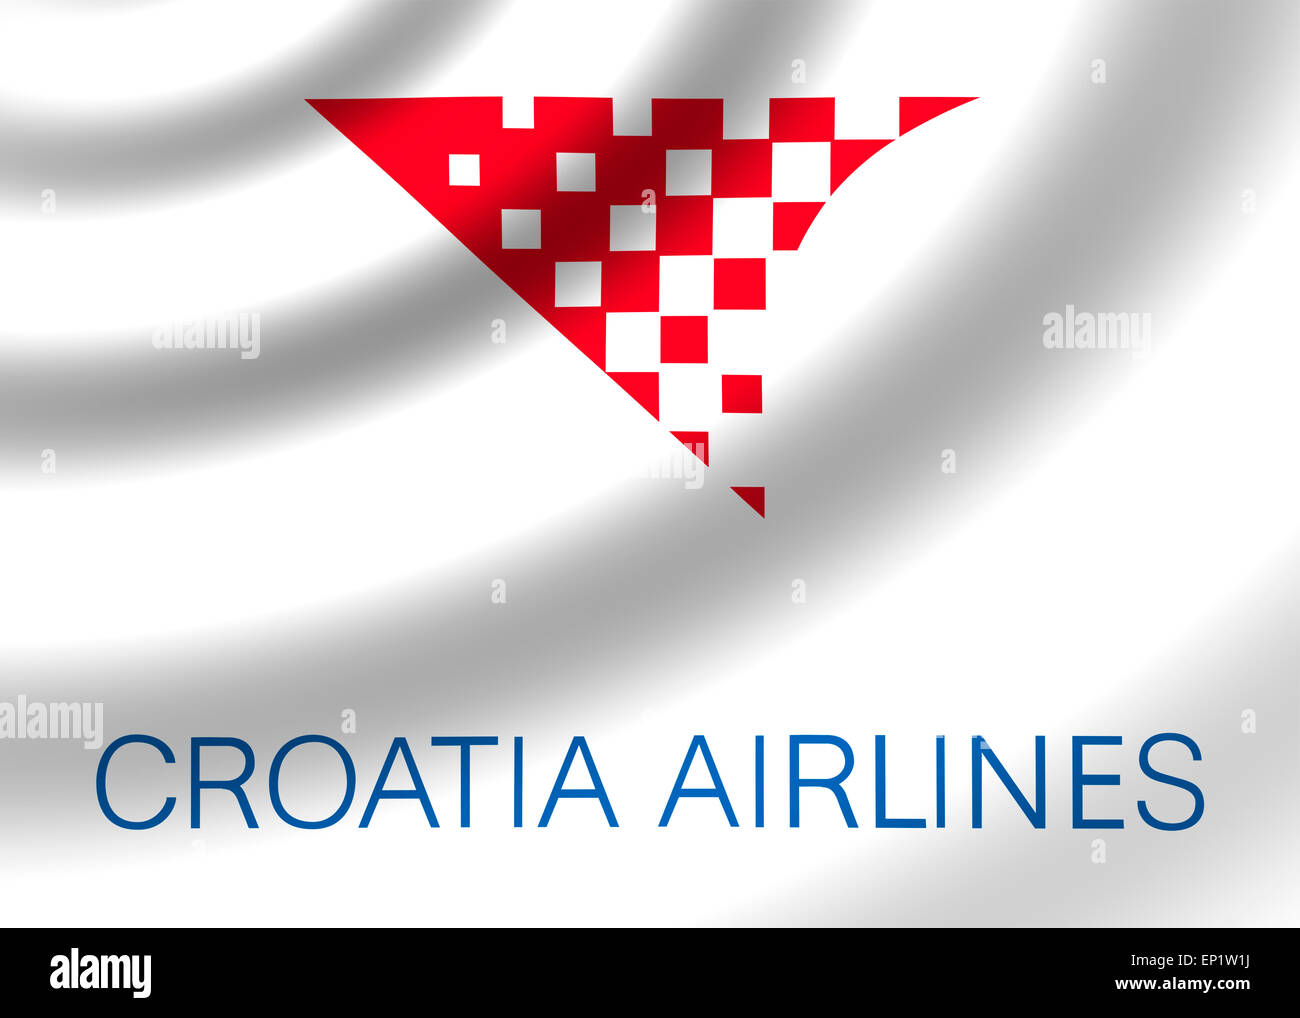 Croatia Airlines logo symbol flag emblem icon Stock Photo